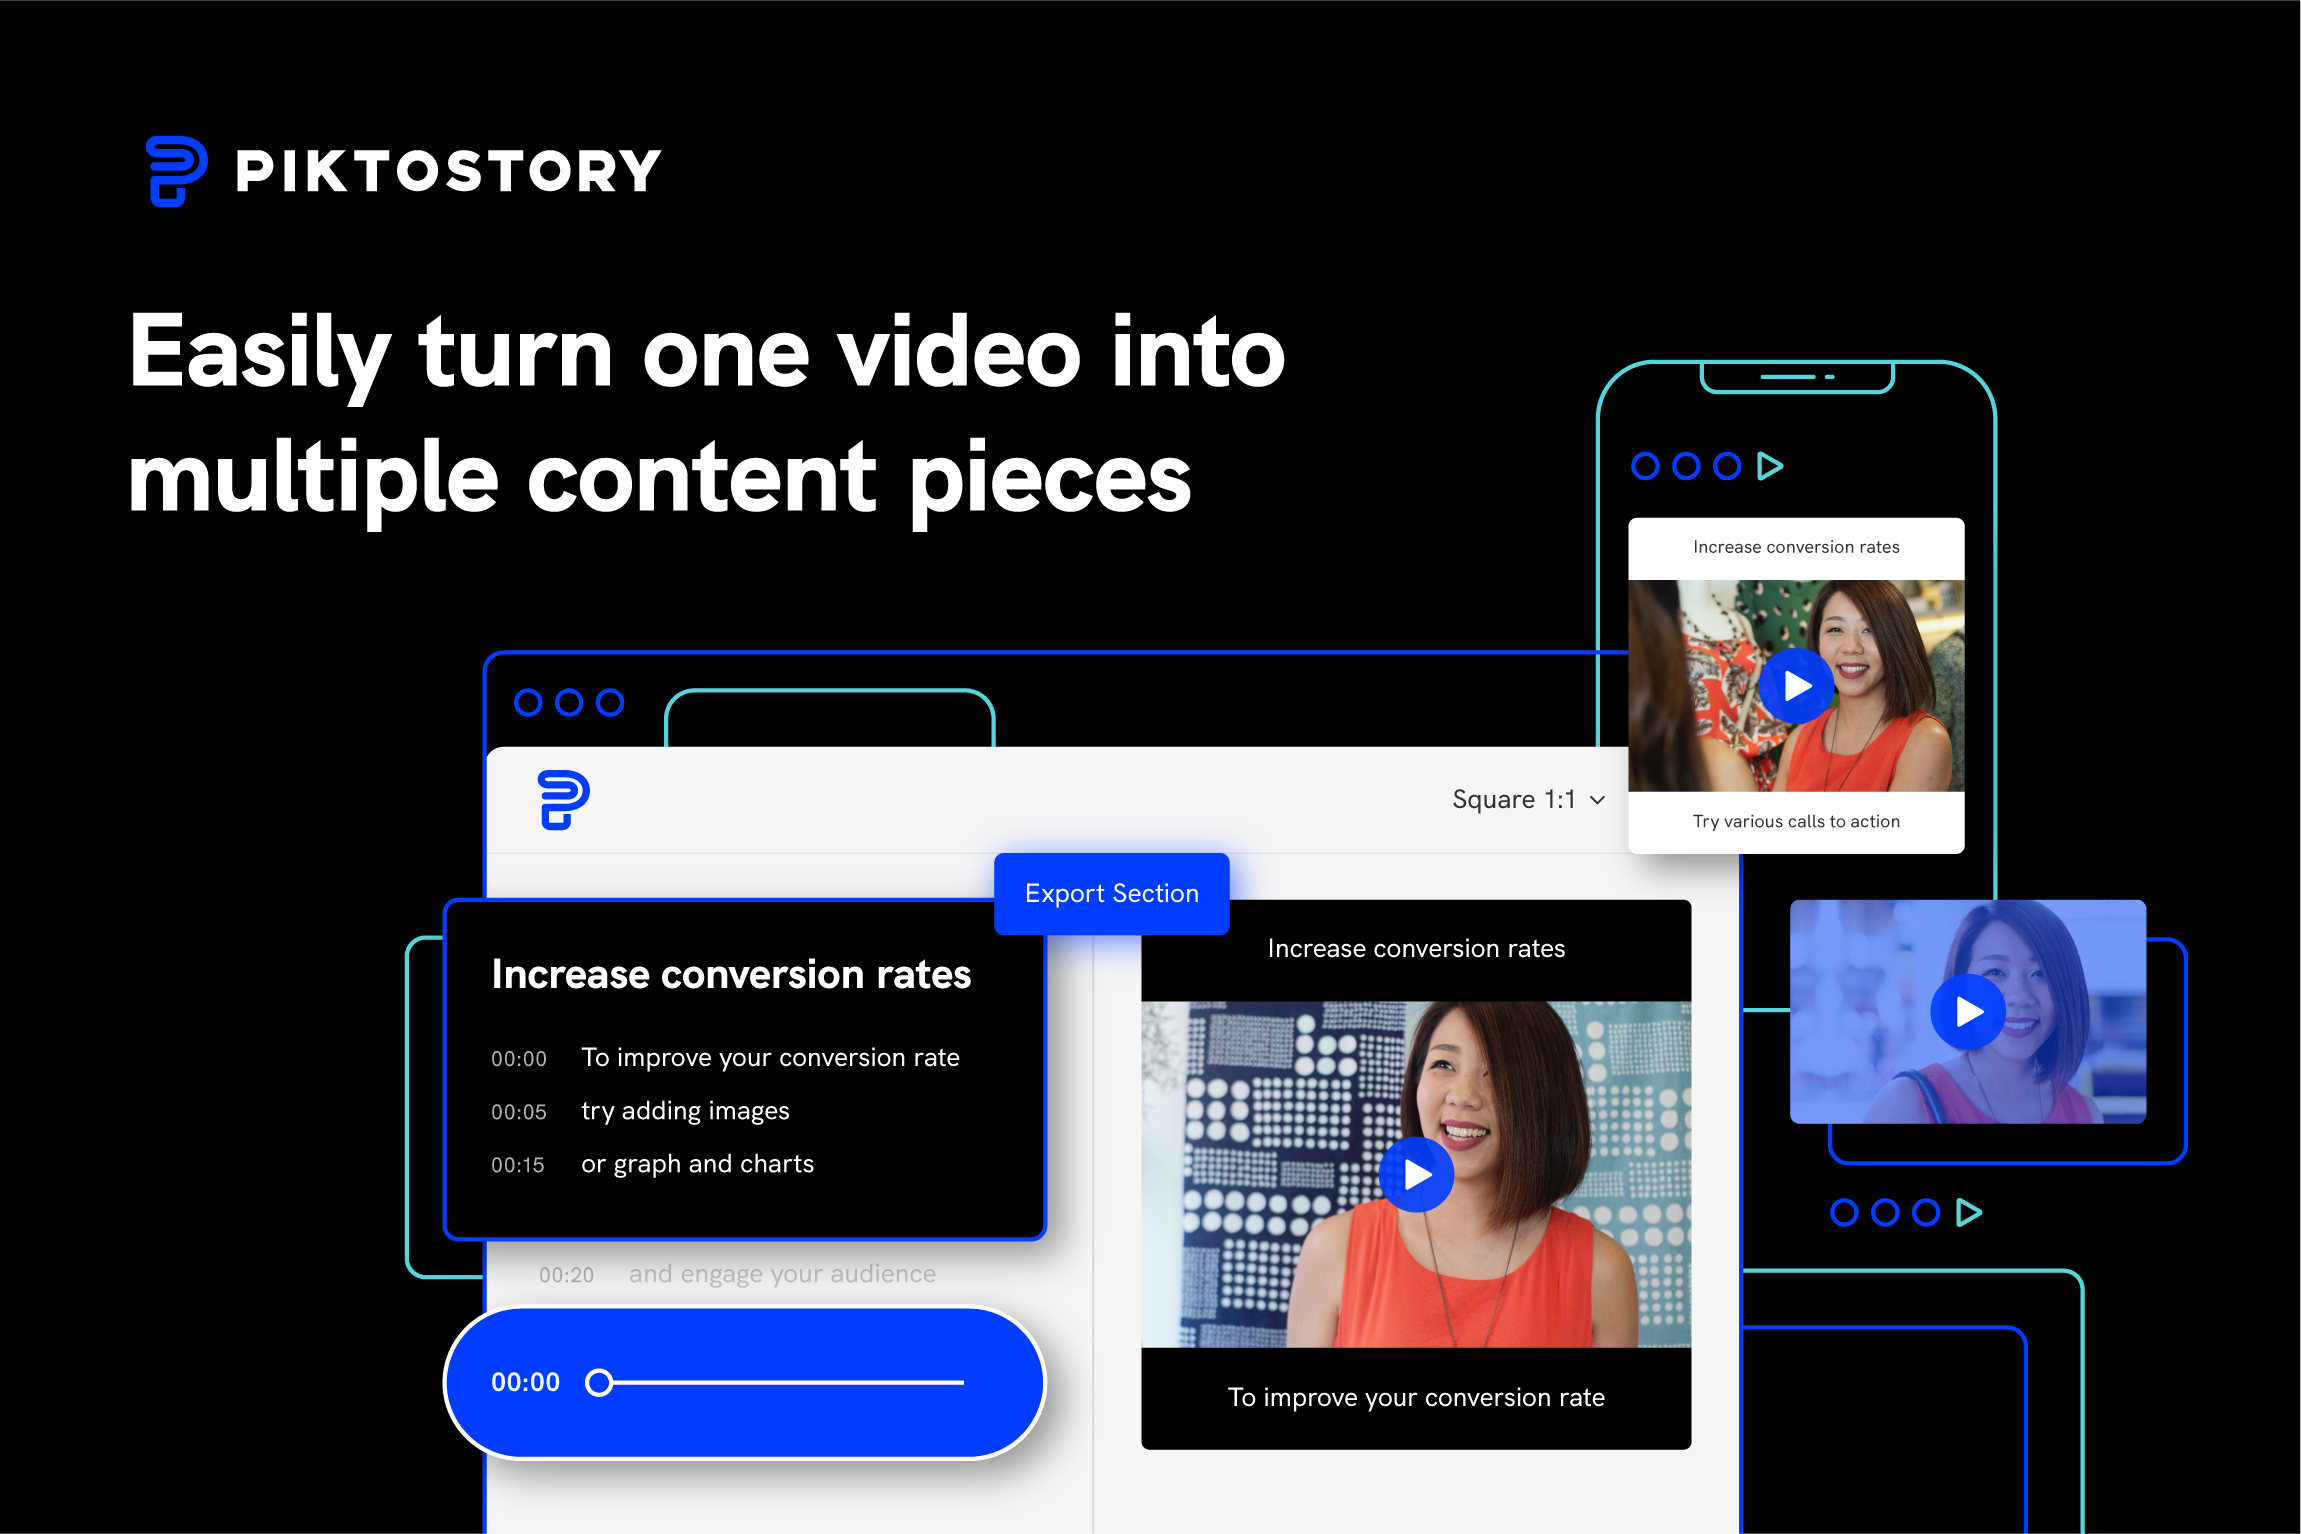 piktostory video creation tool